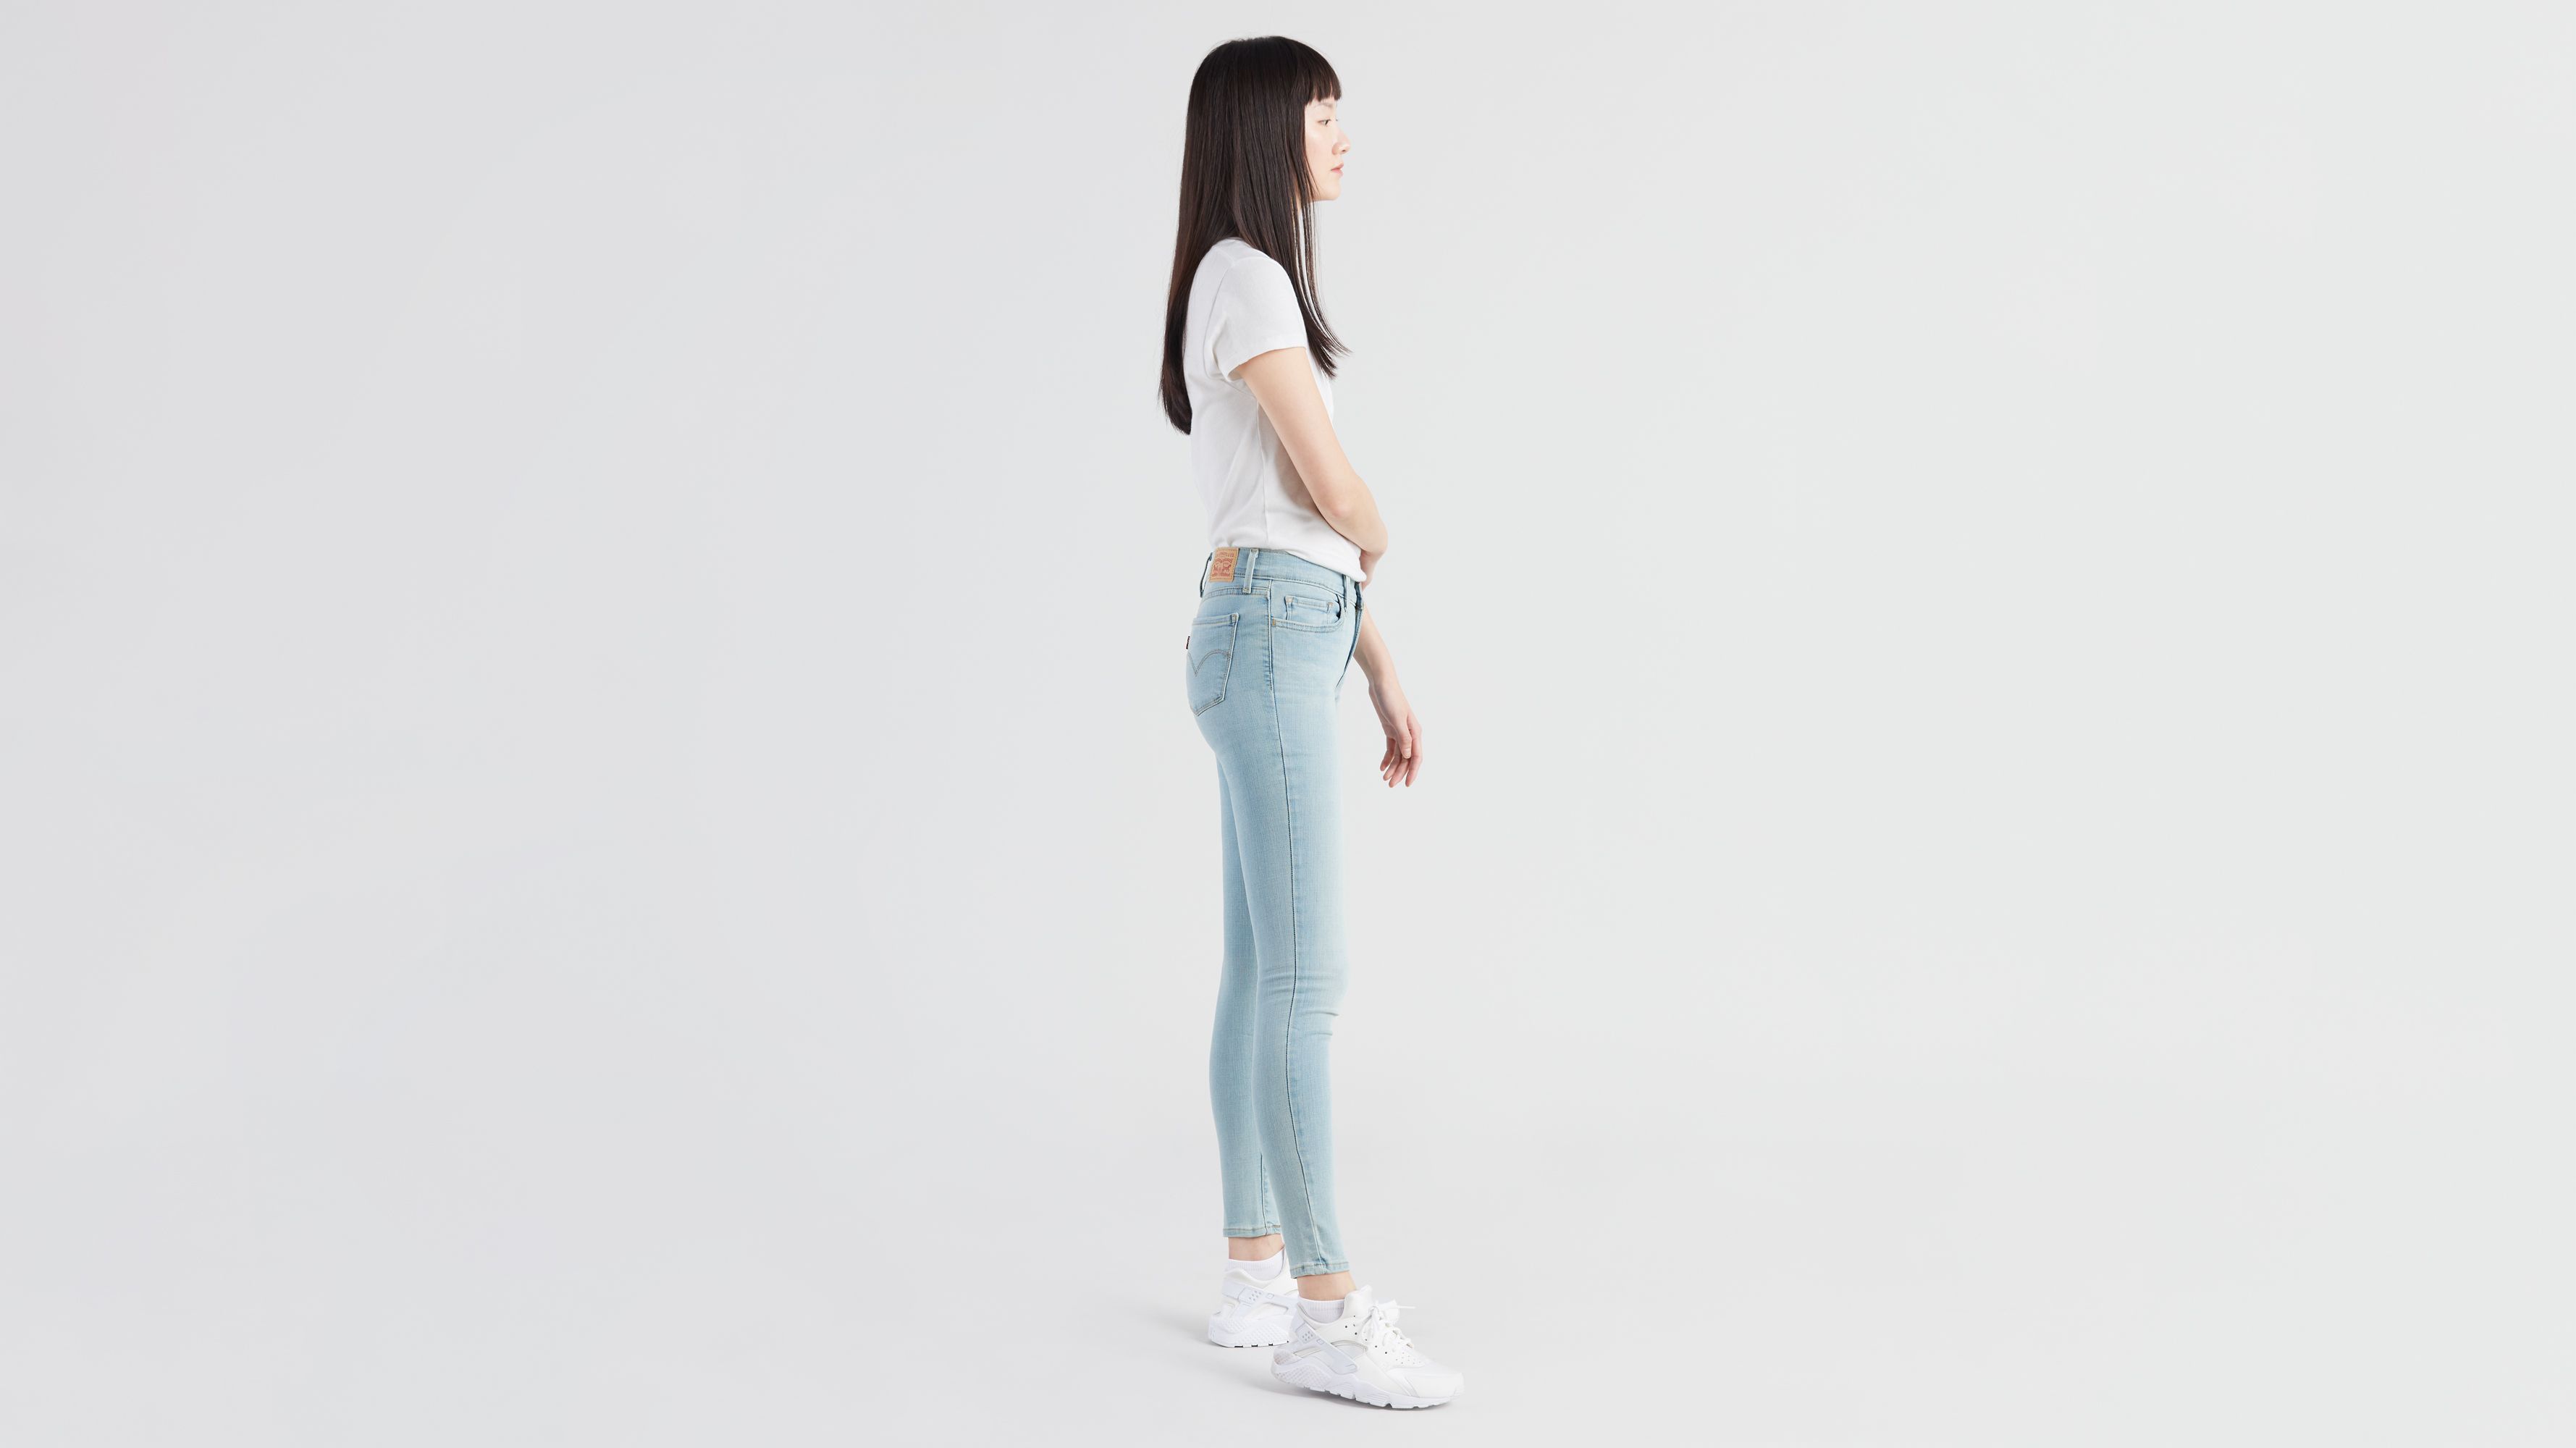 women's levi's 710 super skinny jeans